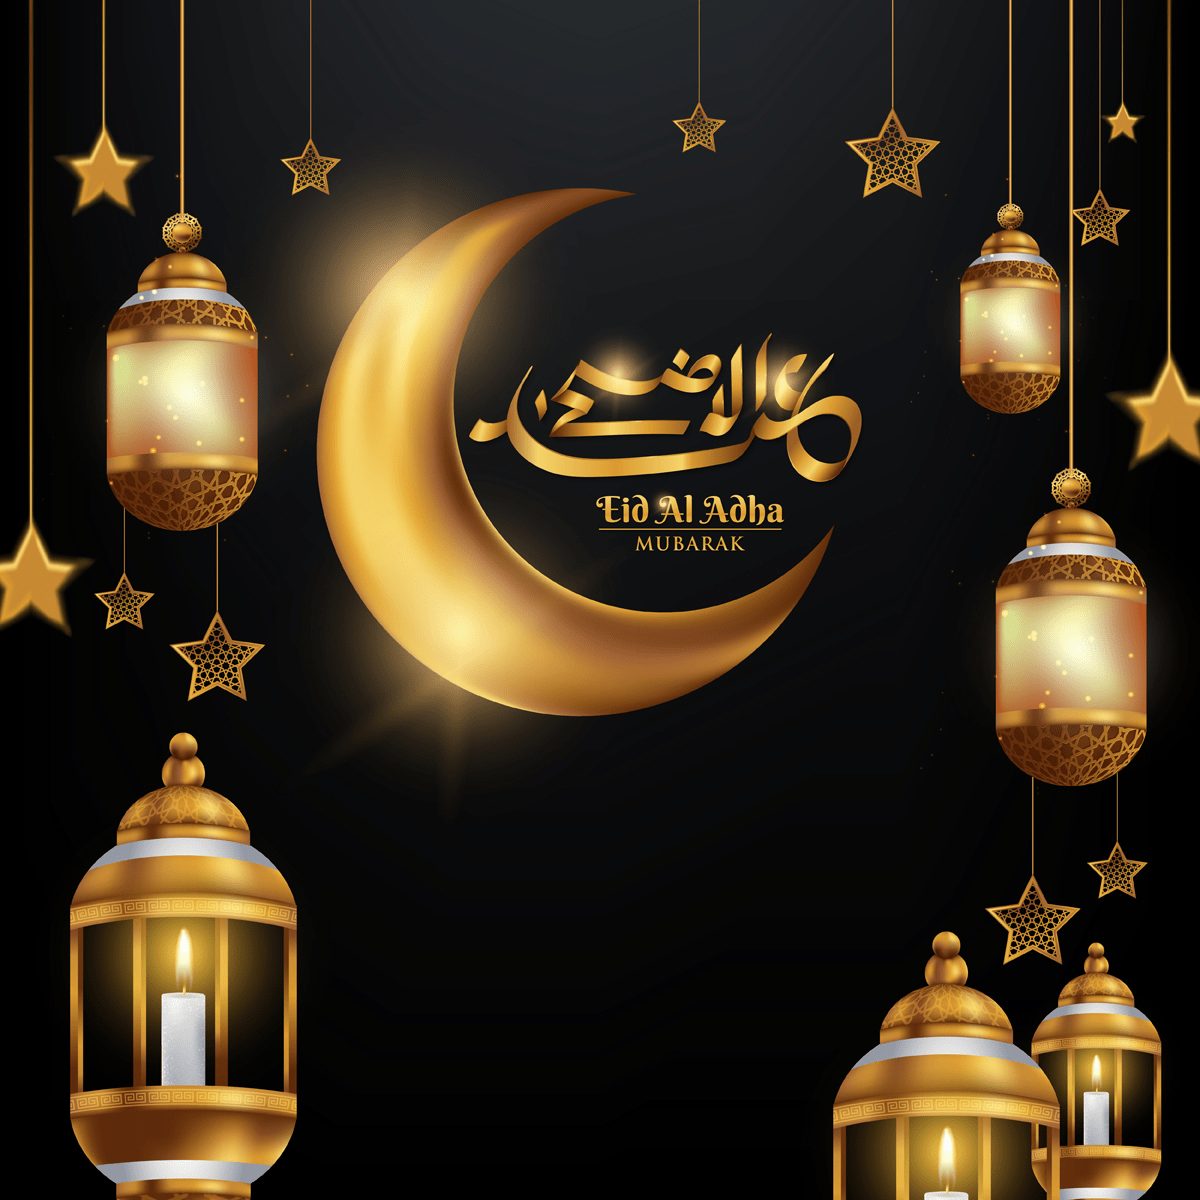 1200x1200 Download Eid Al Adha Mubarak 2020 Image HD. Eid Ul Adha Mubarak 2020 Wishes HD. Eid Ul Adha Id Ul Azha Eid Al Adha Wishes WhatsApp Status. Eid Mubarak 2020